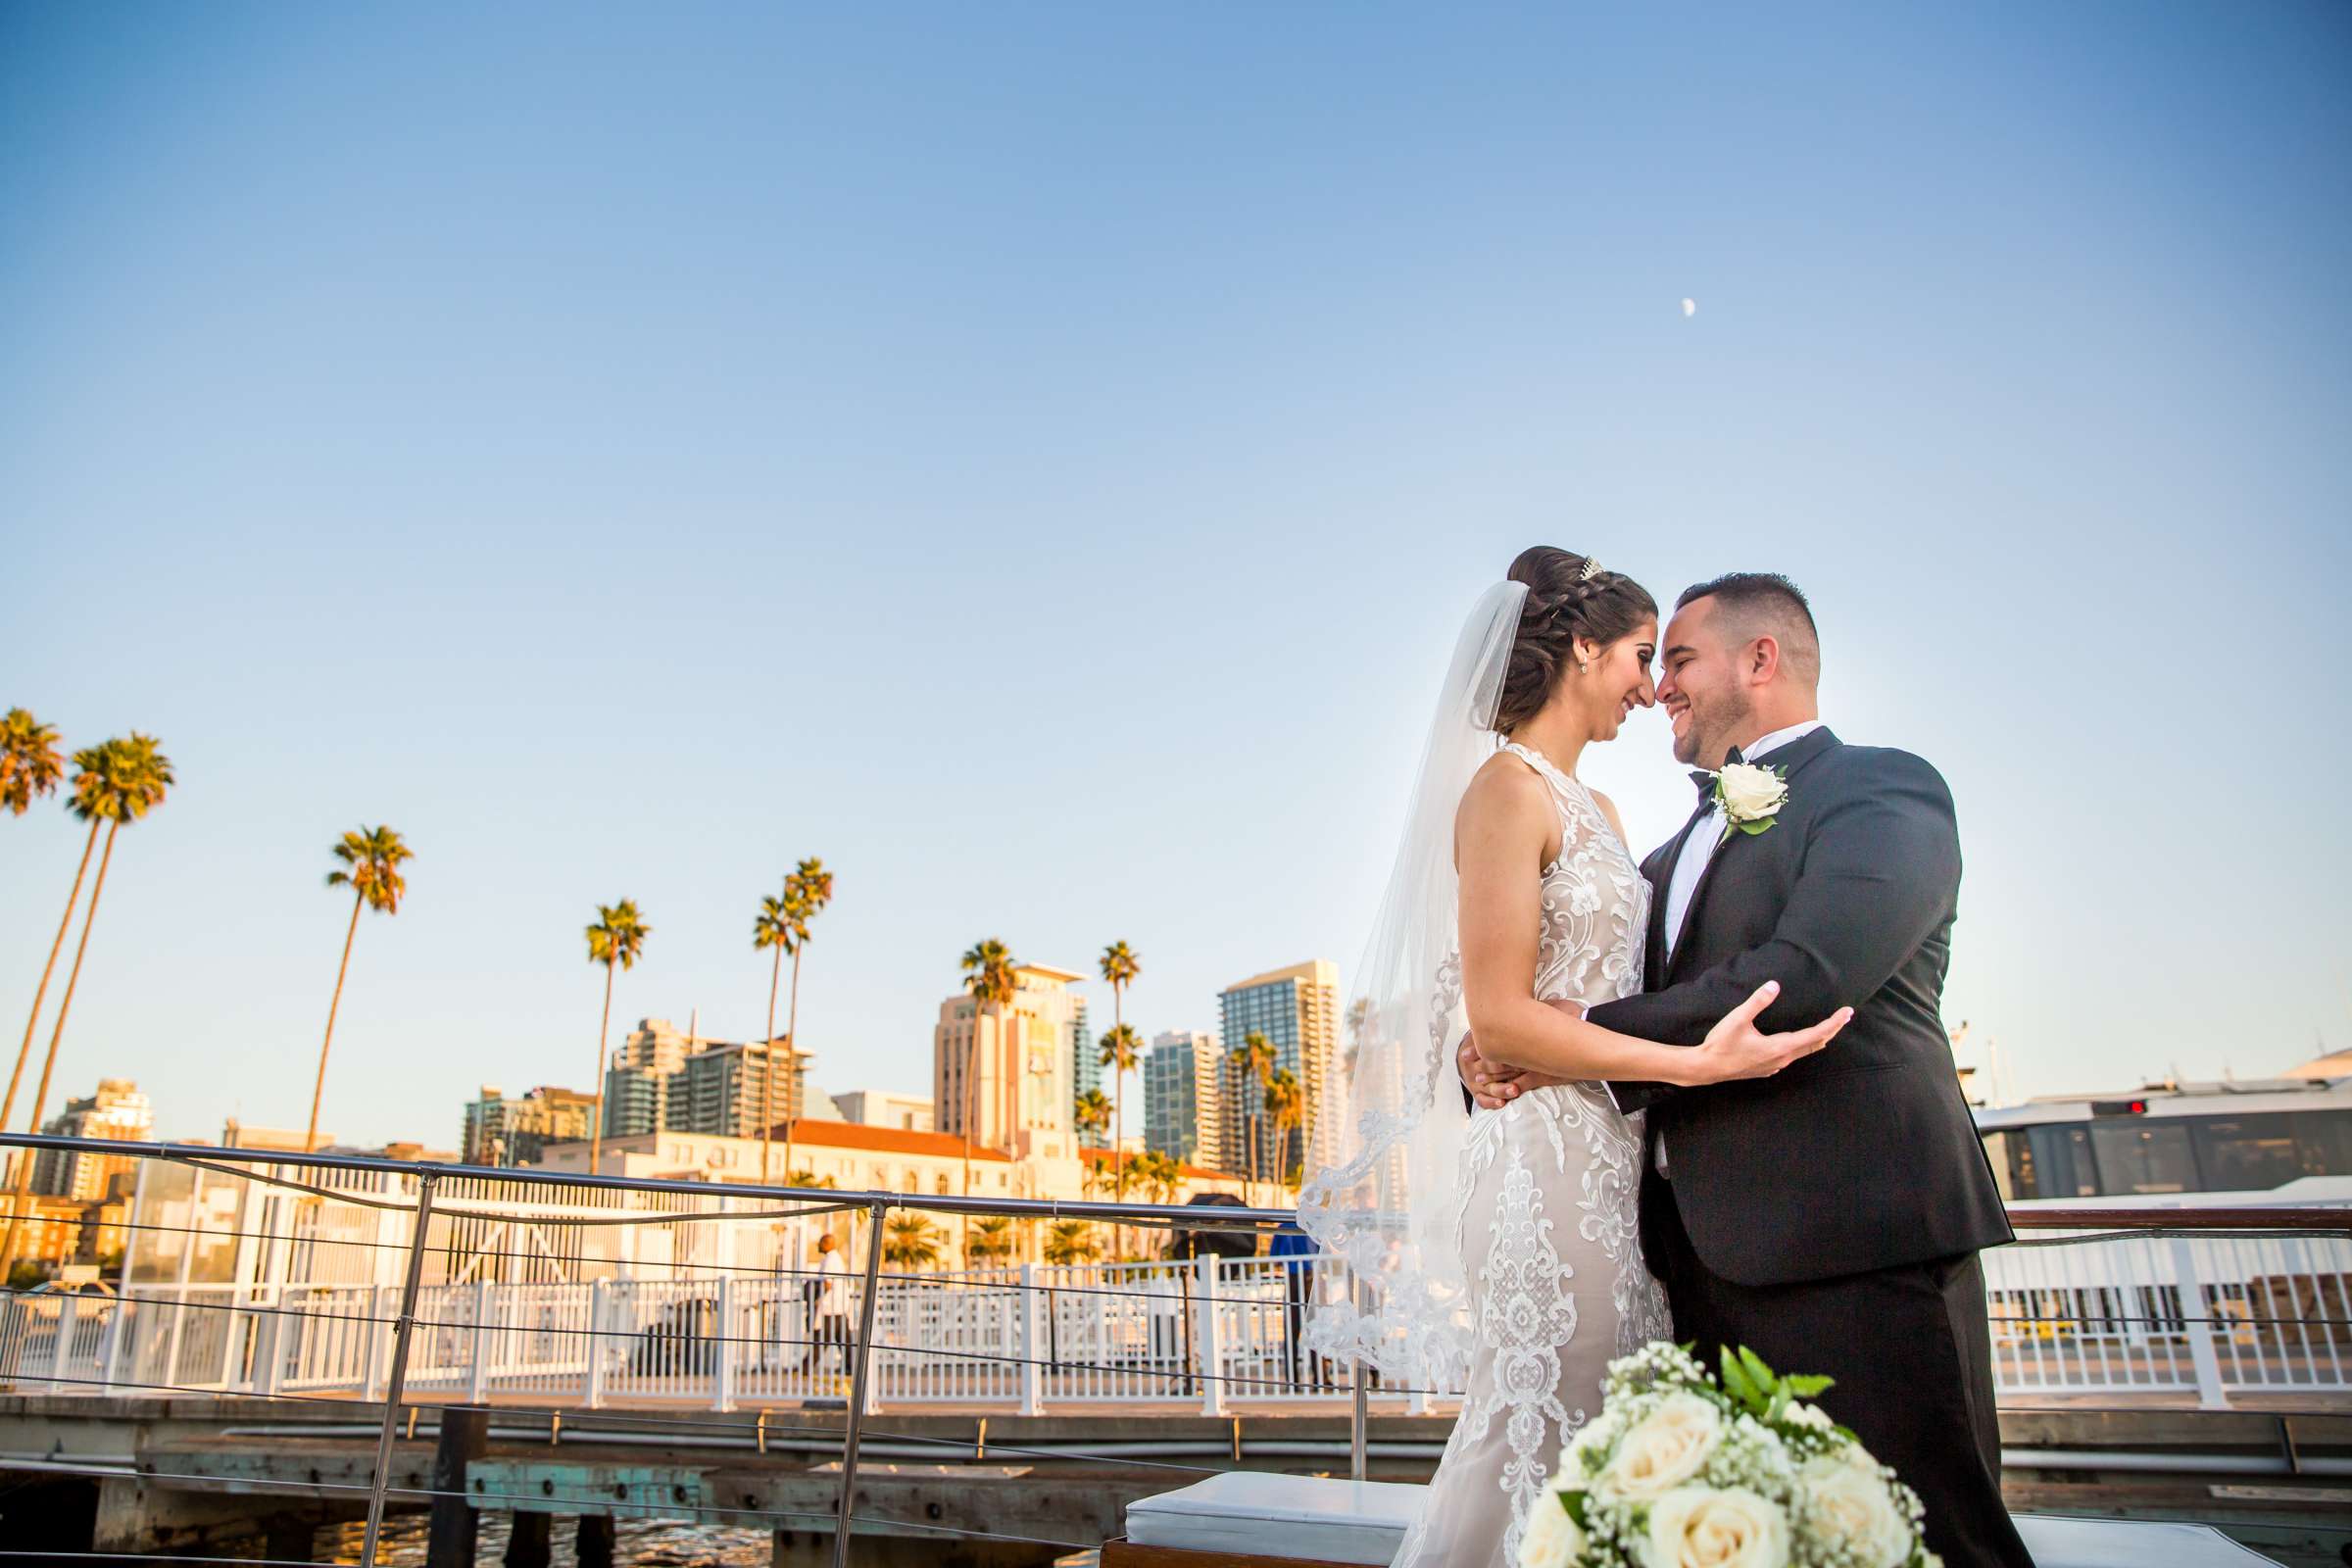 Hornblower cruise line Wedding, Leena and Daniel Wedding Photo #21 by True Photography